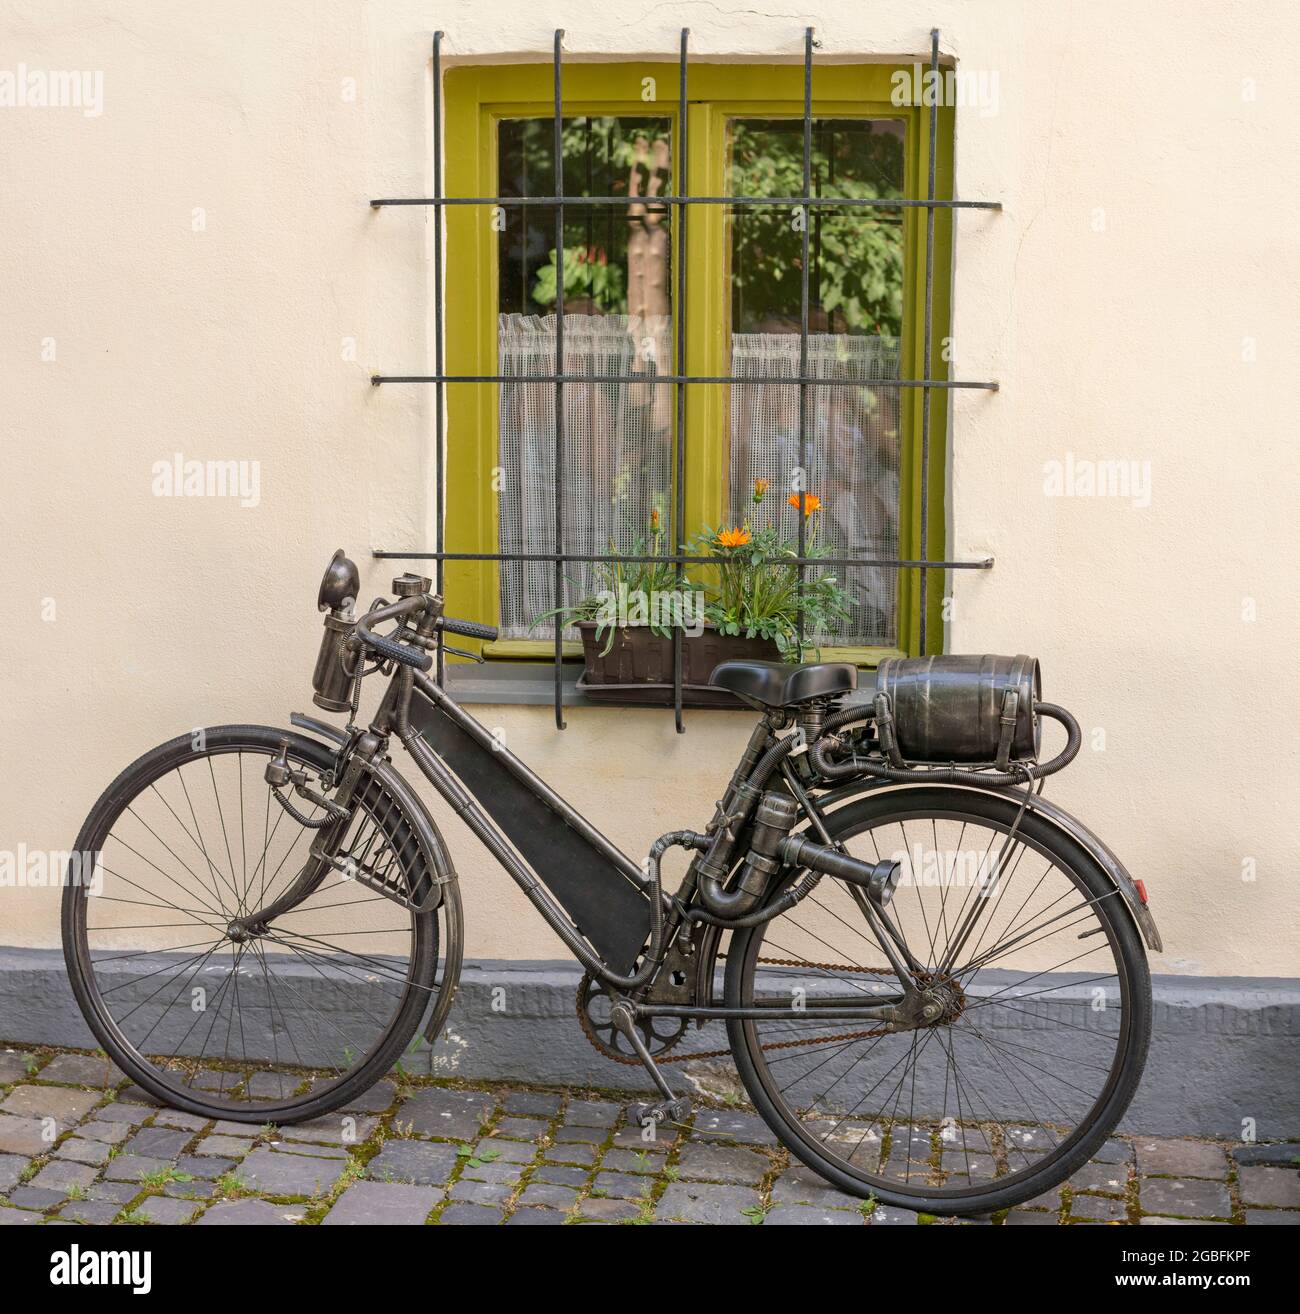 Antike fahrrad -Fotos und -Bildmaterial in hoher Auflösung – Alamy